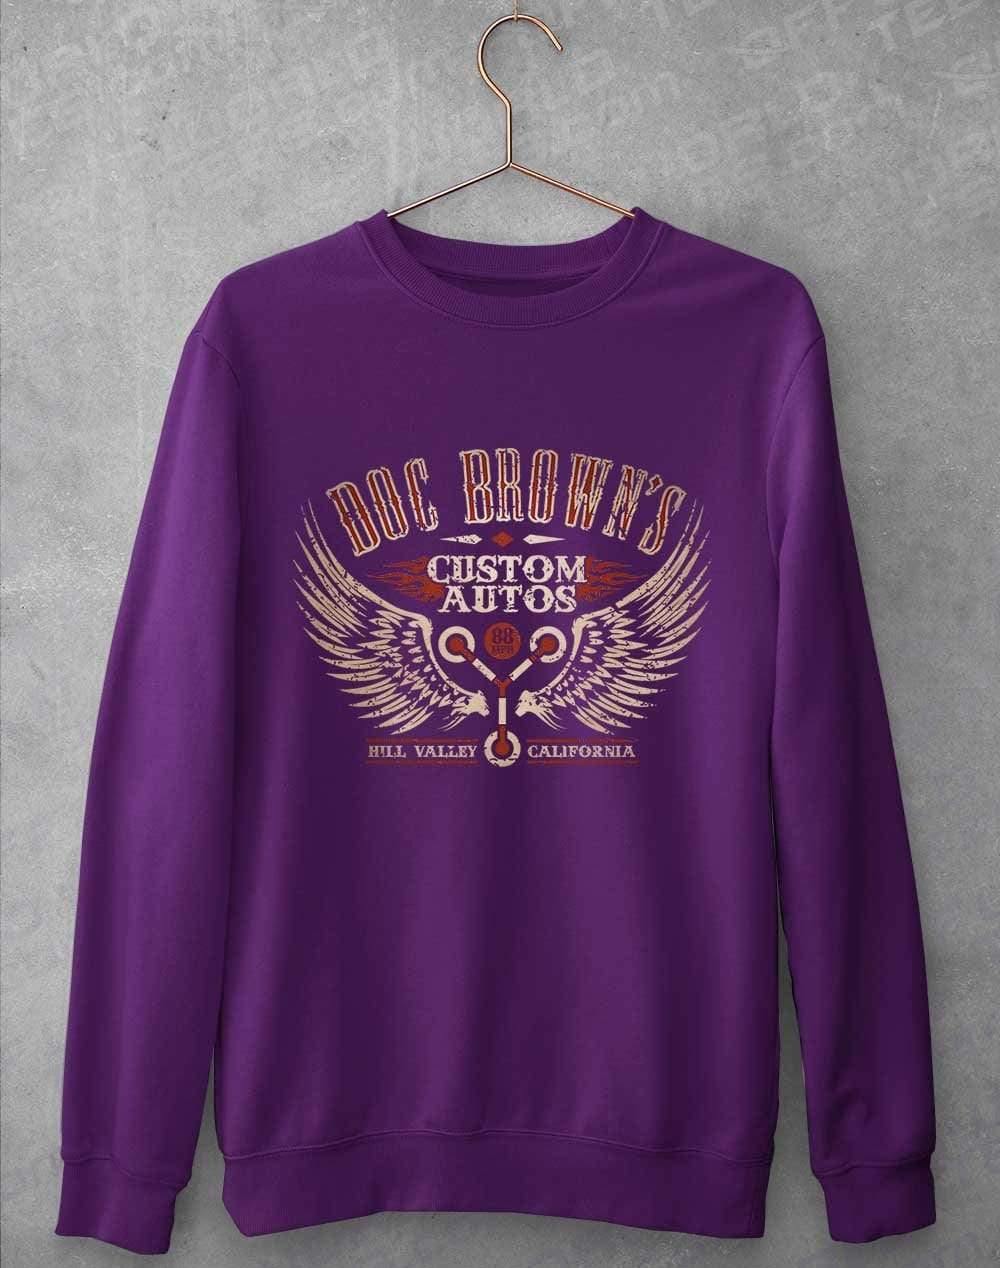 Doc Brown's Custom Autos Sweatshirt S / Purple  - Off World Tees